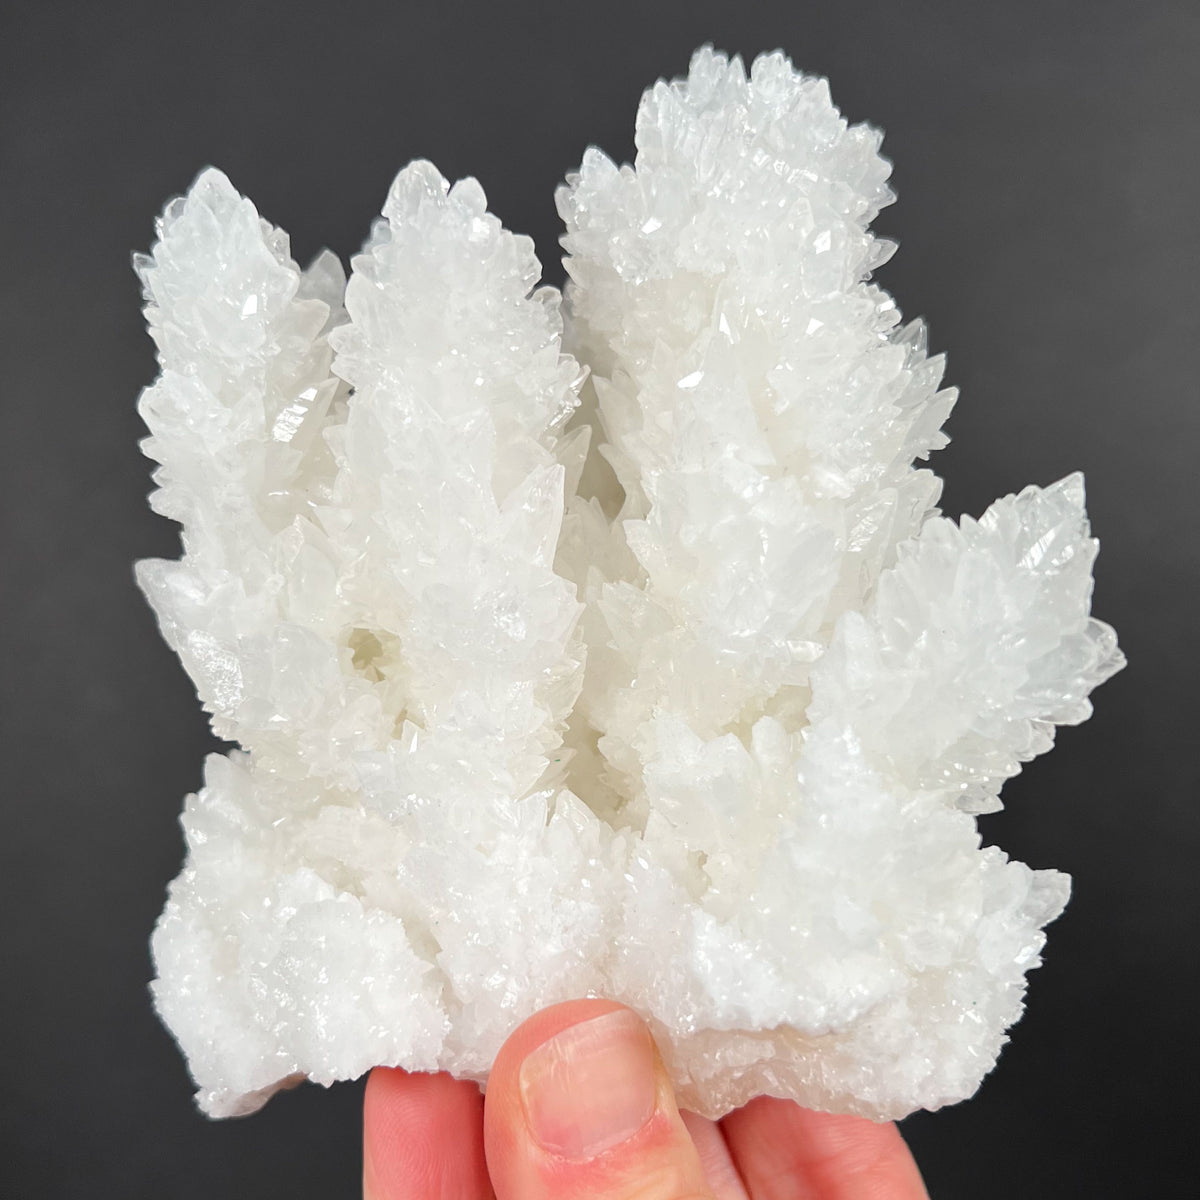 White Calcite and Aragonite Crystals